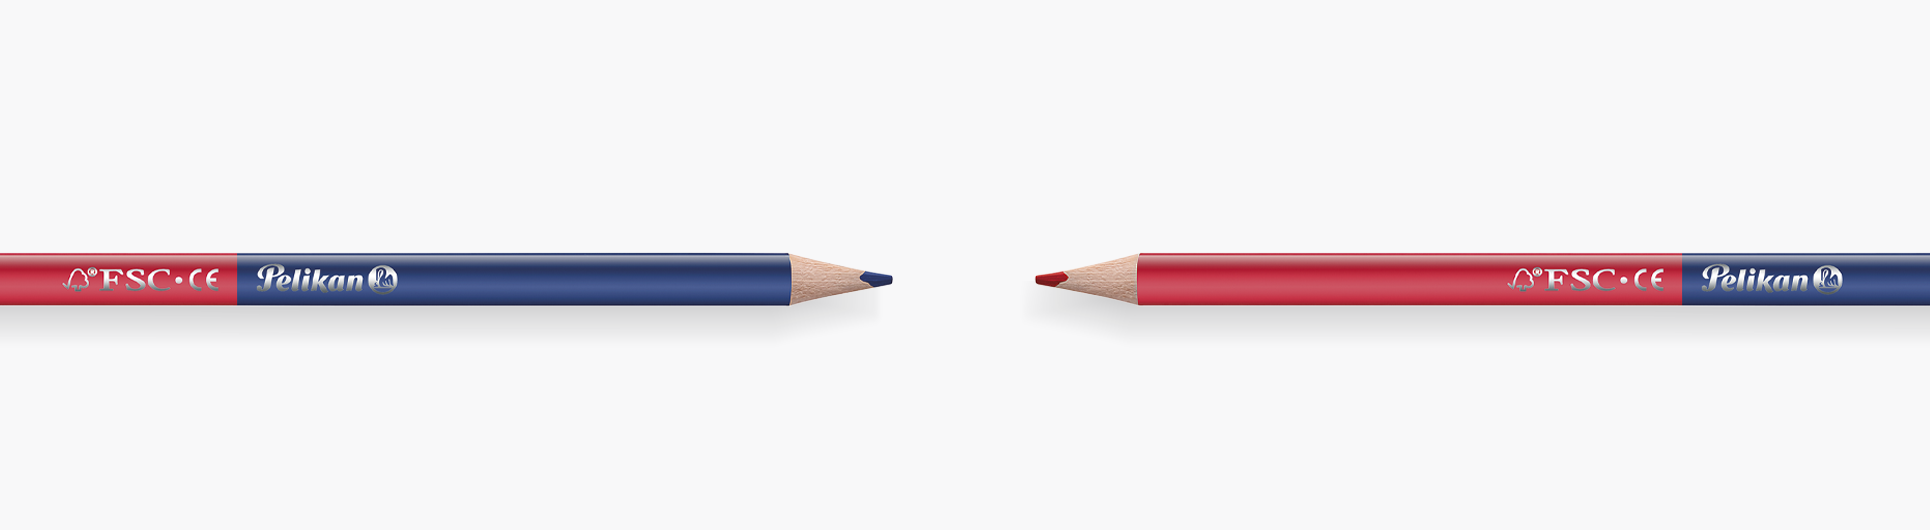 Creioane groase triunghiulare, bicolore: roșu-albastru